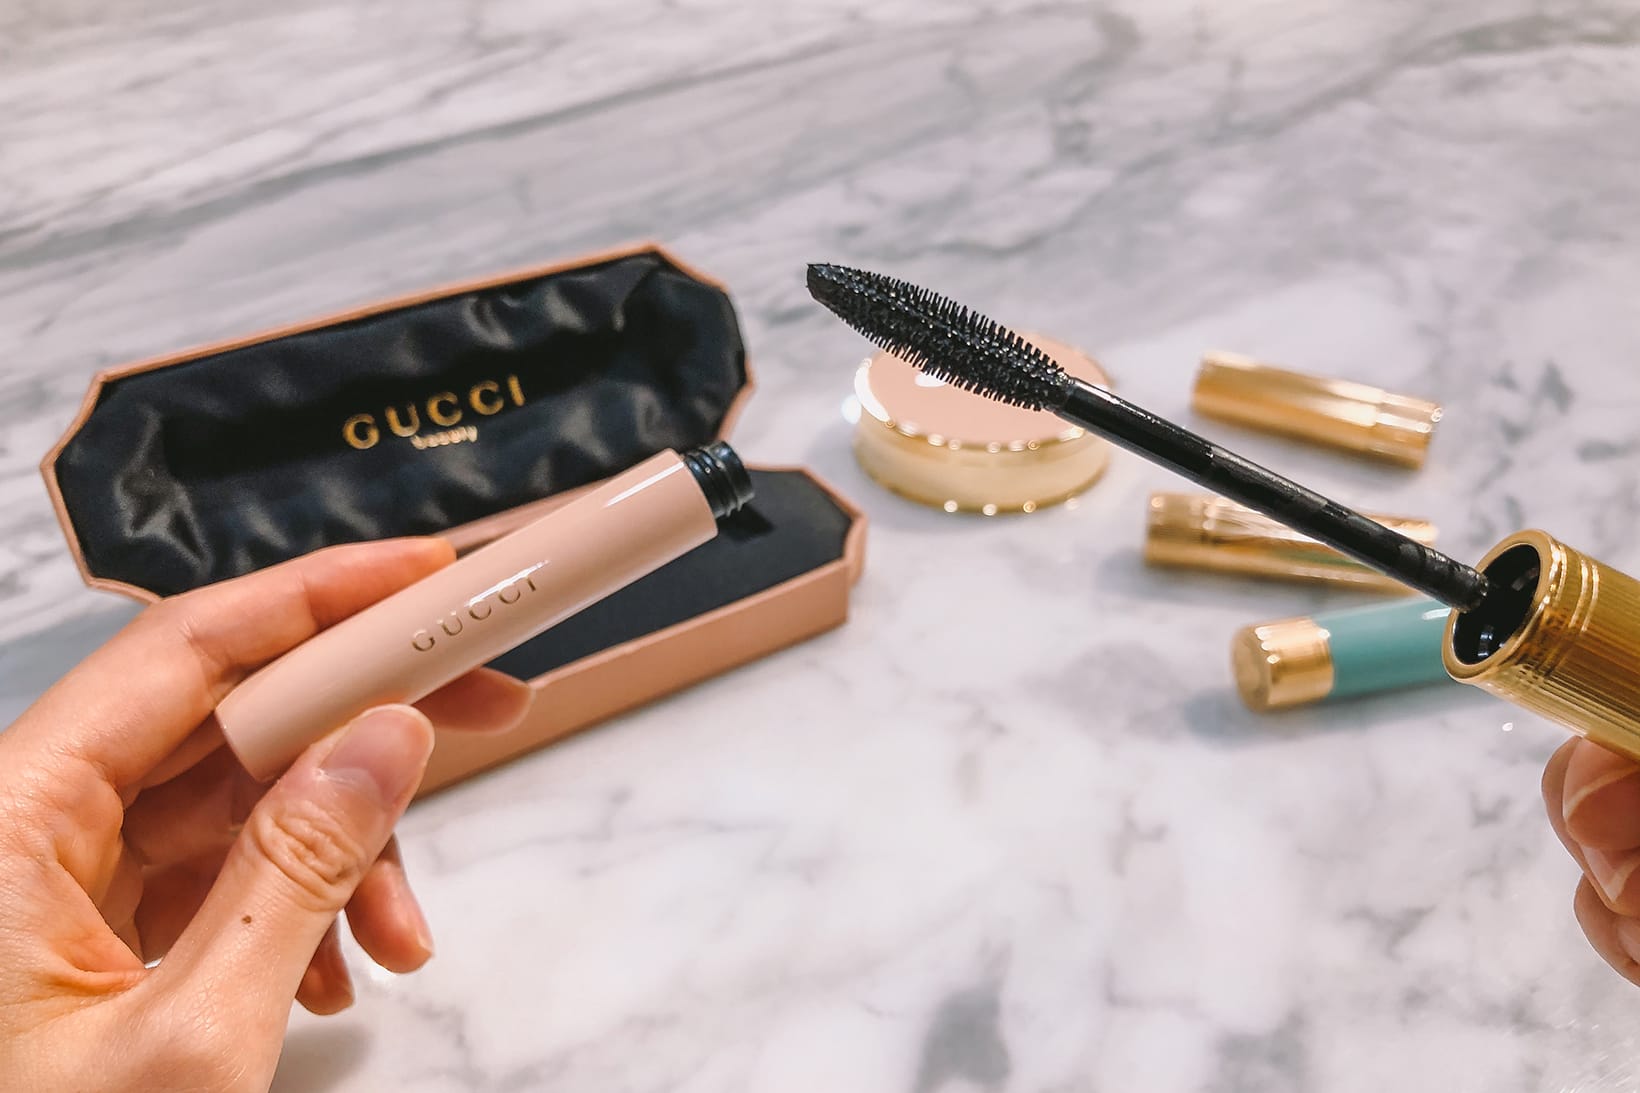 Gucci Beauty Review: Powder, Lipstick 